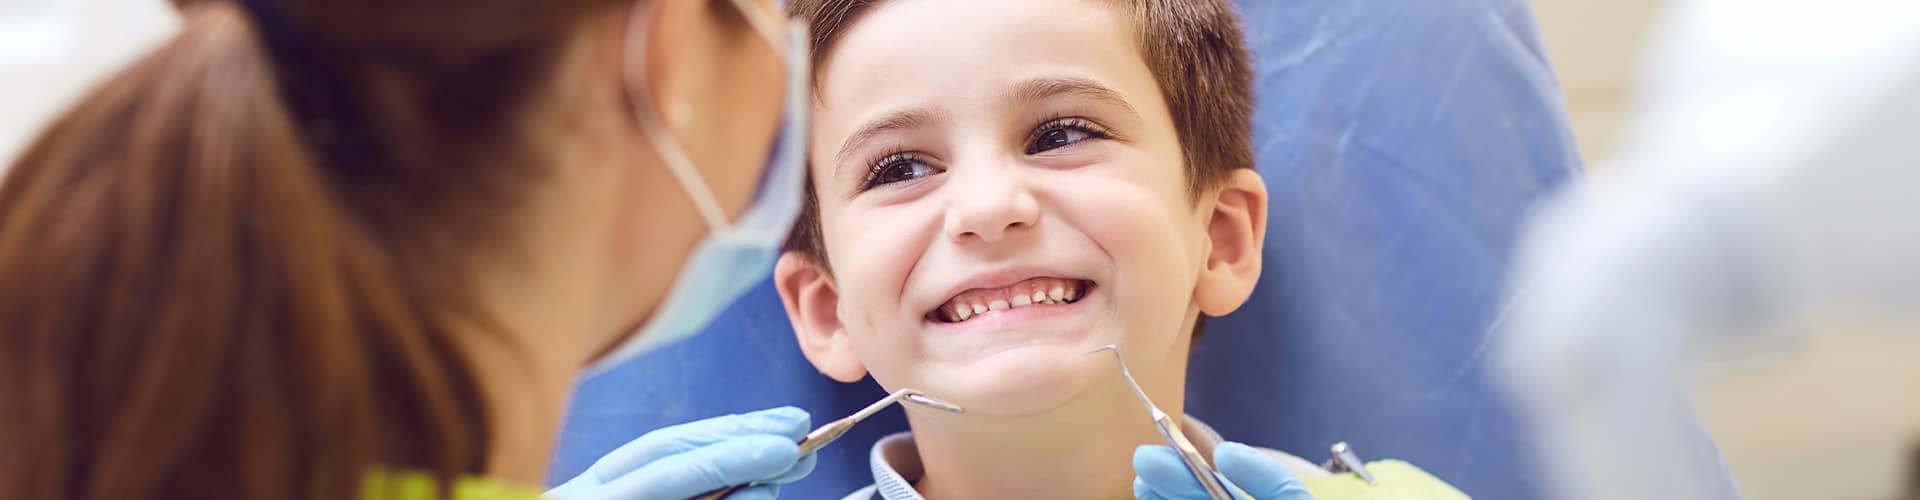 Biological Pediatric Dentistry Banner Image